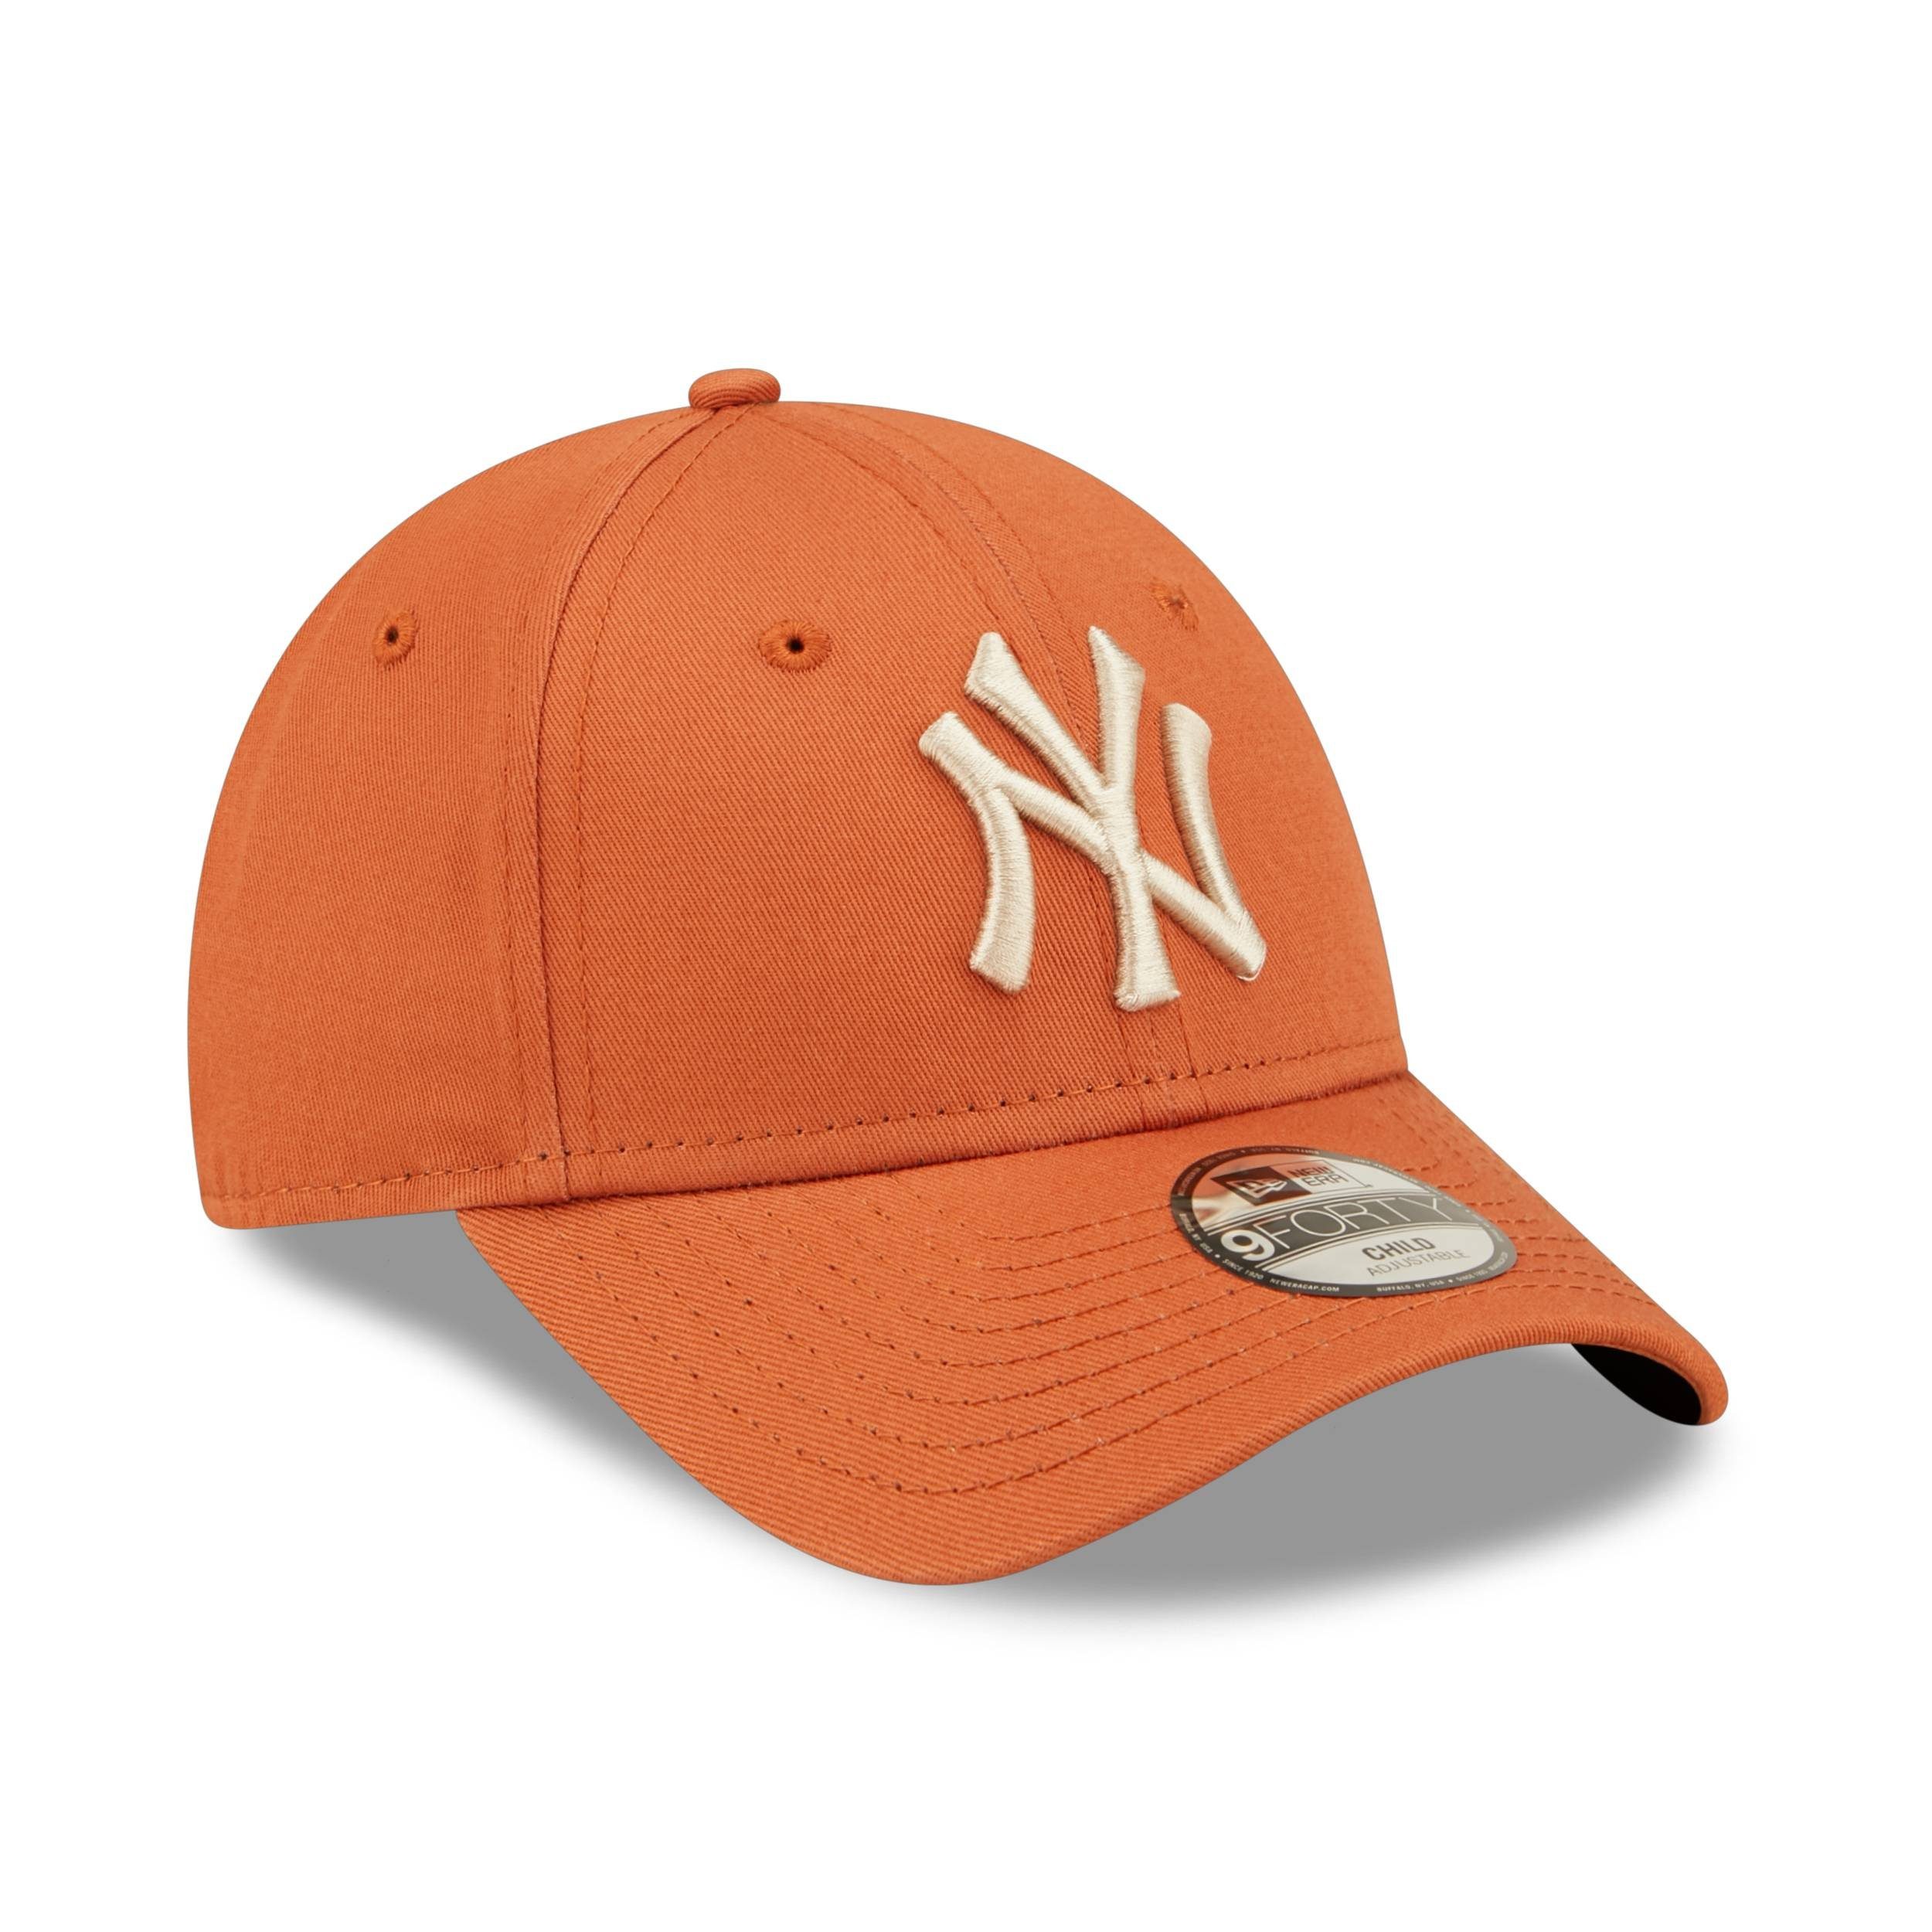 York Baseball 9Forty Era New Cap Era Yankees New League orange New Chyt Cap